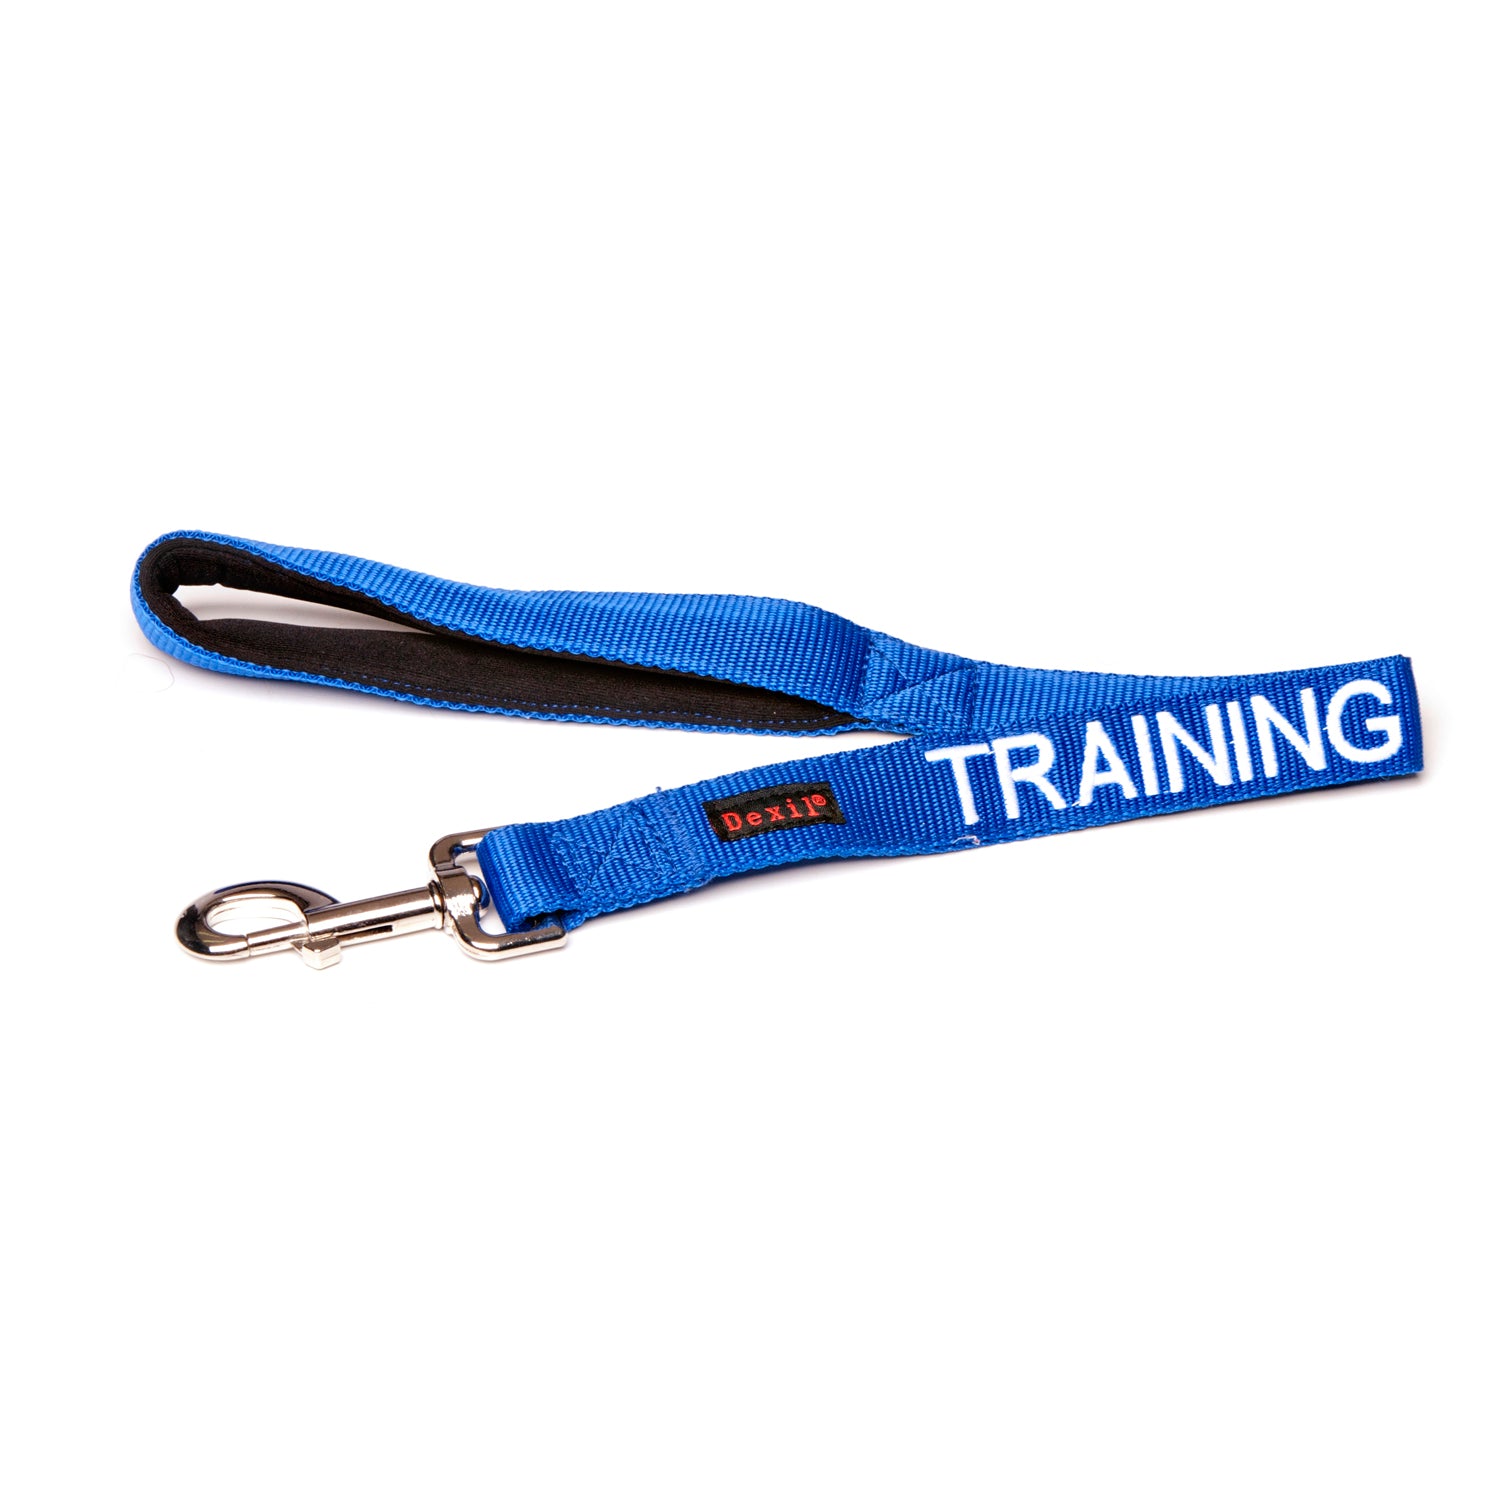 Dexil Friendly Dog Collars Blue TRAINING Short 60cm (2ft) Lead